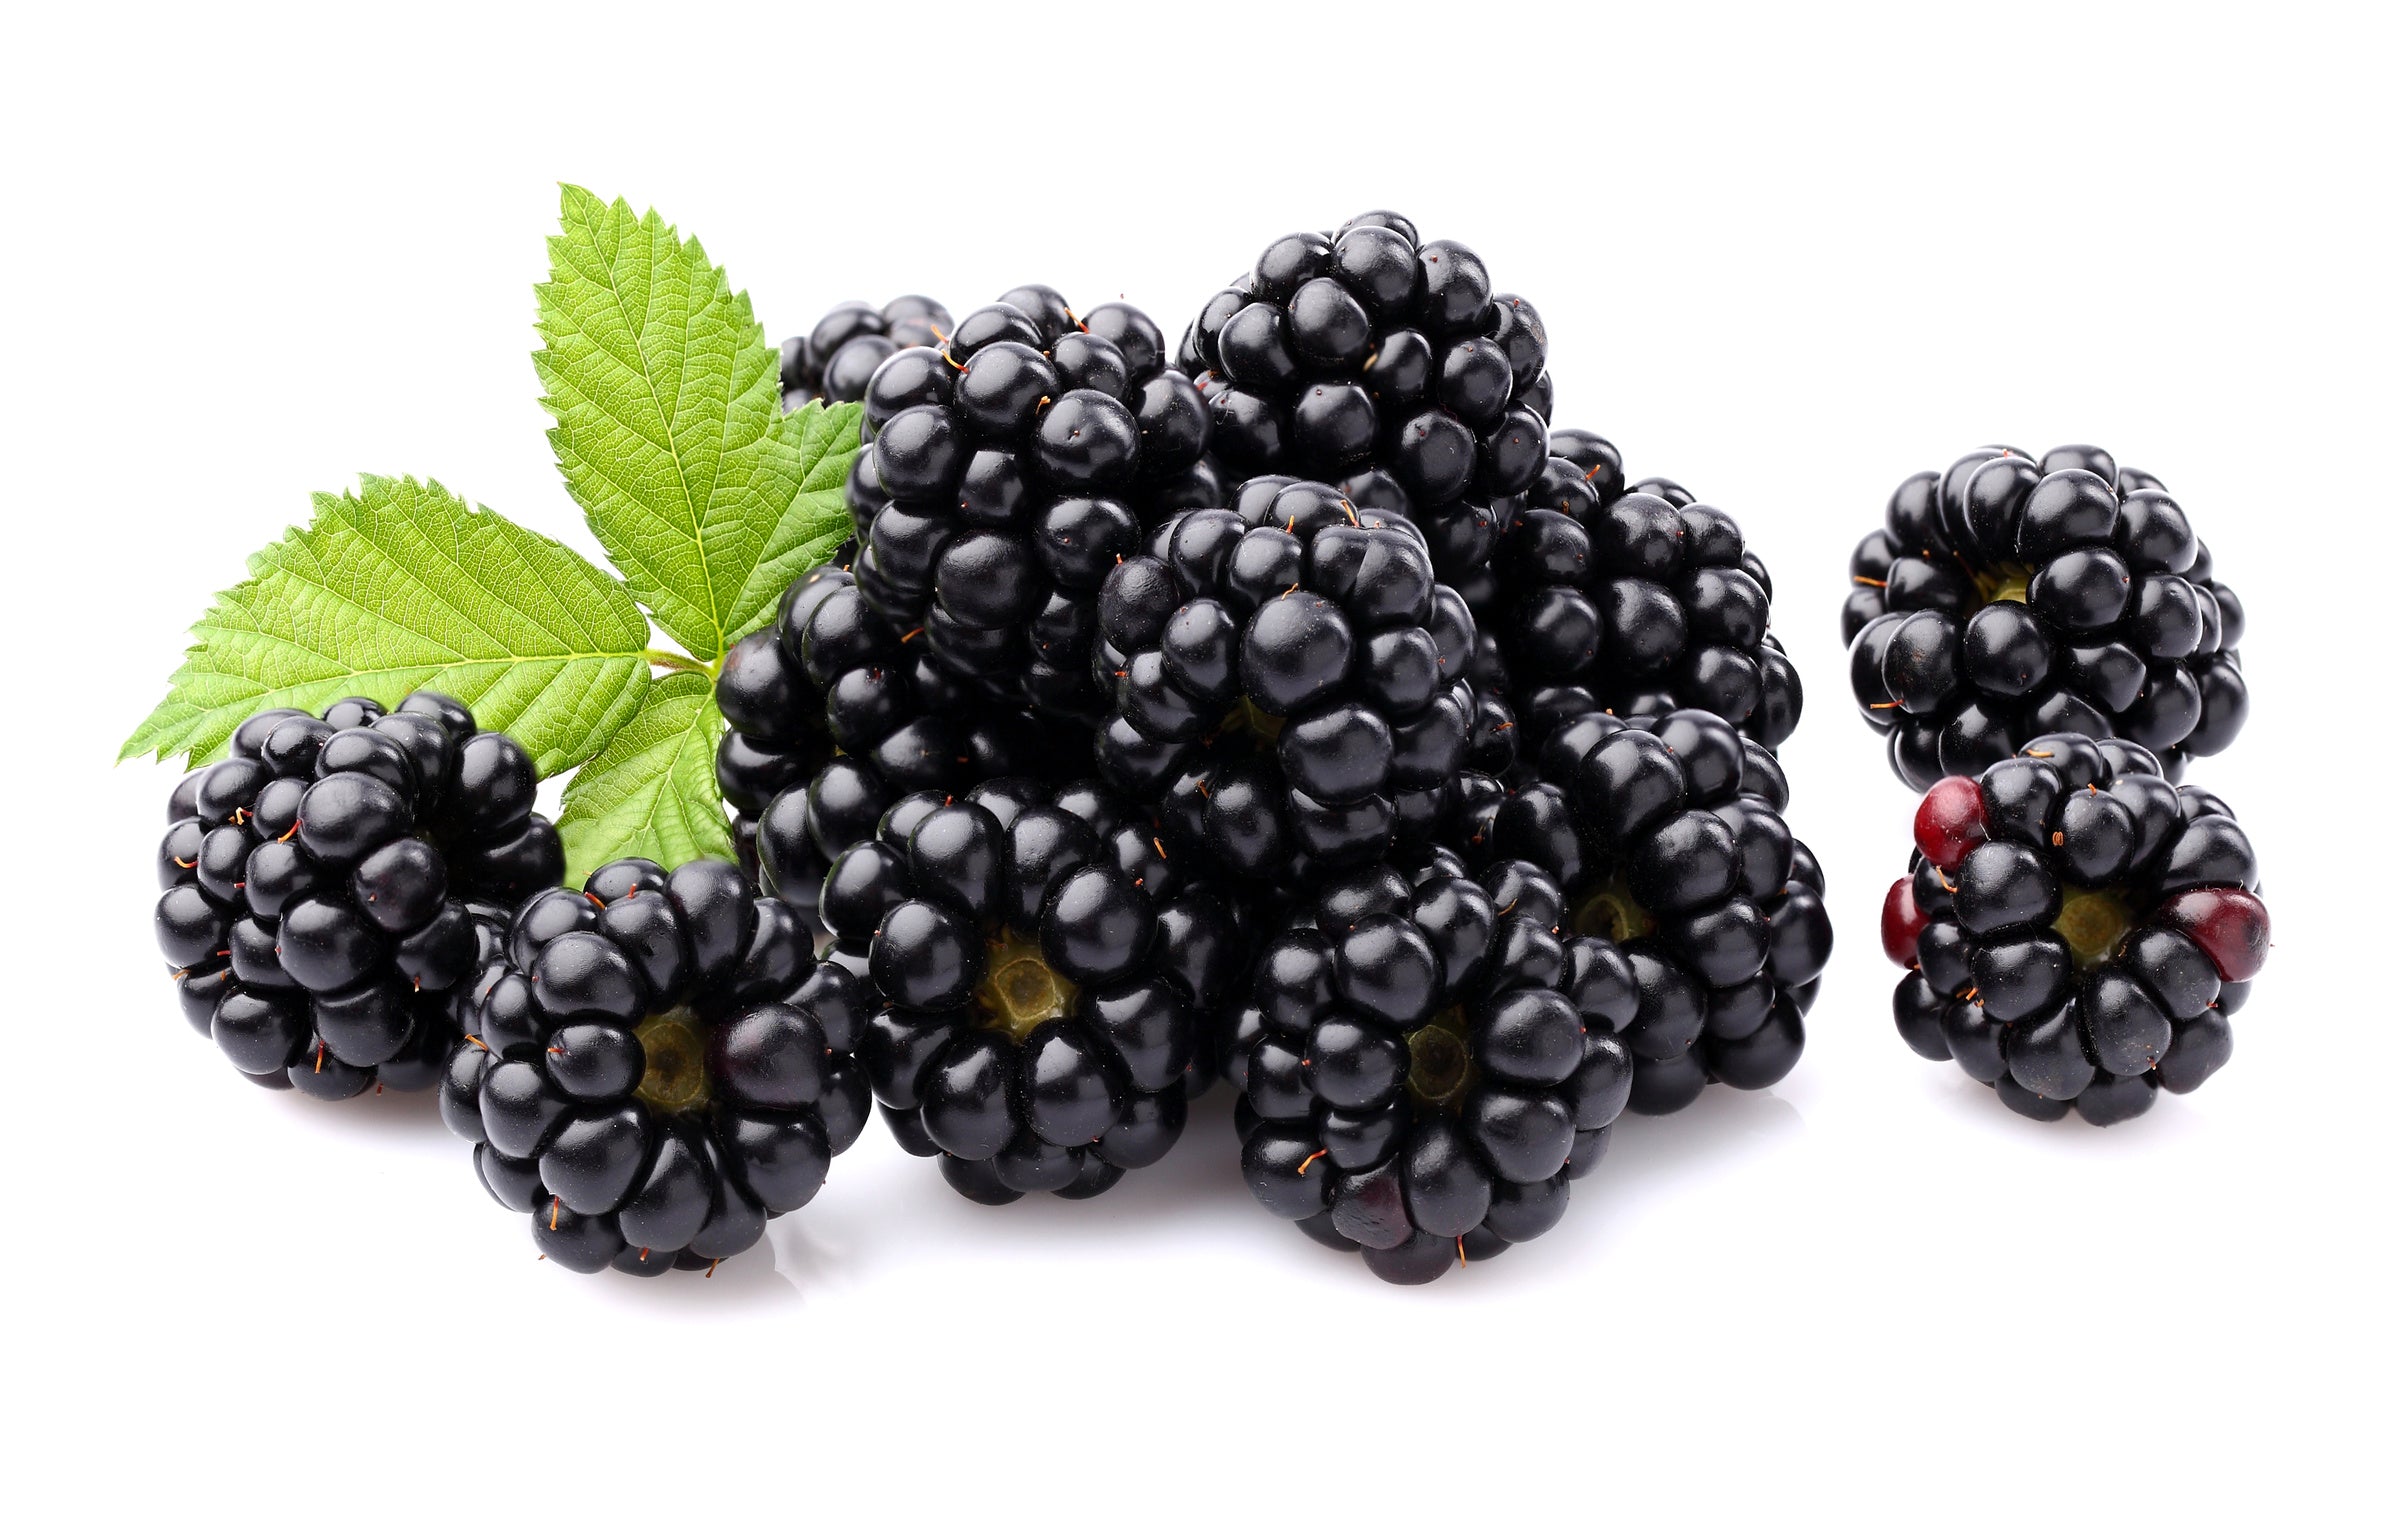 Blackberry antioxidants